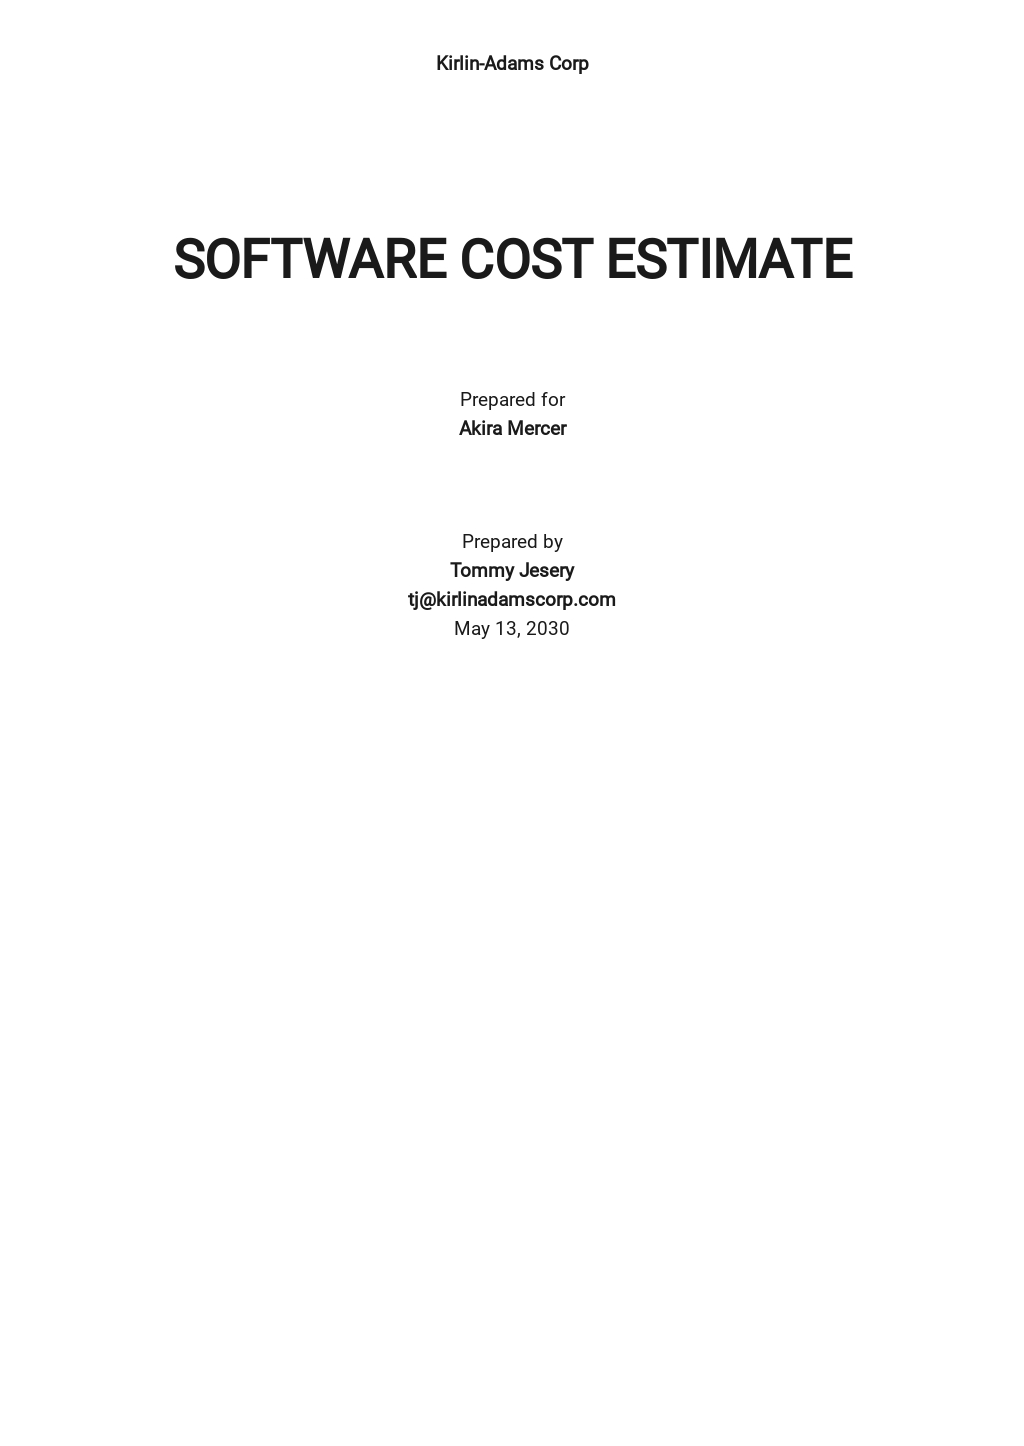 Software Cost Estimate Template.jpe